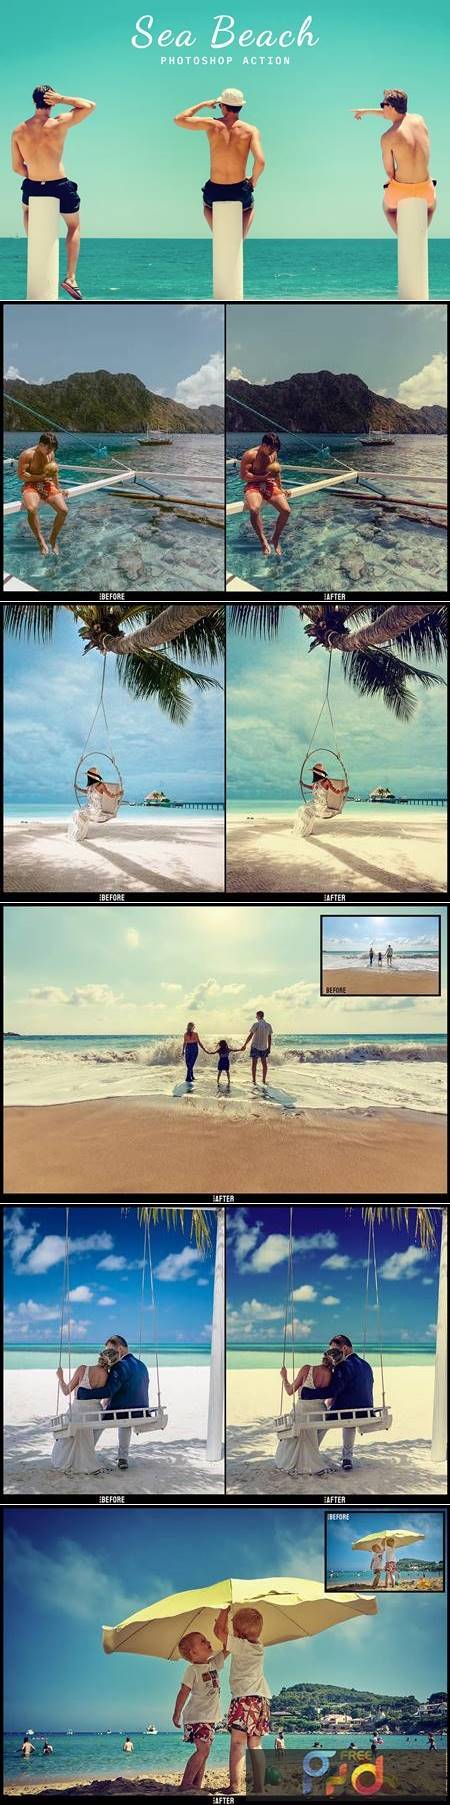 Sea Beach - Photoshop Action ZE5A63N 1